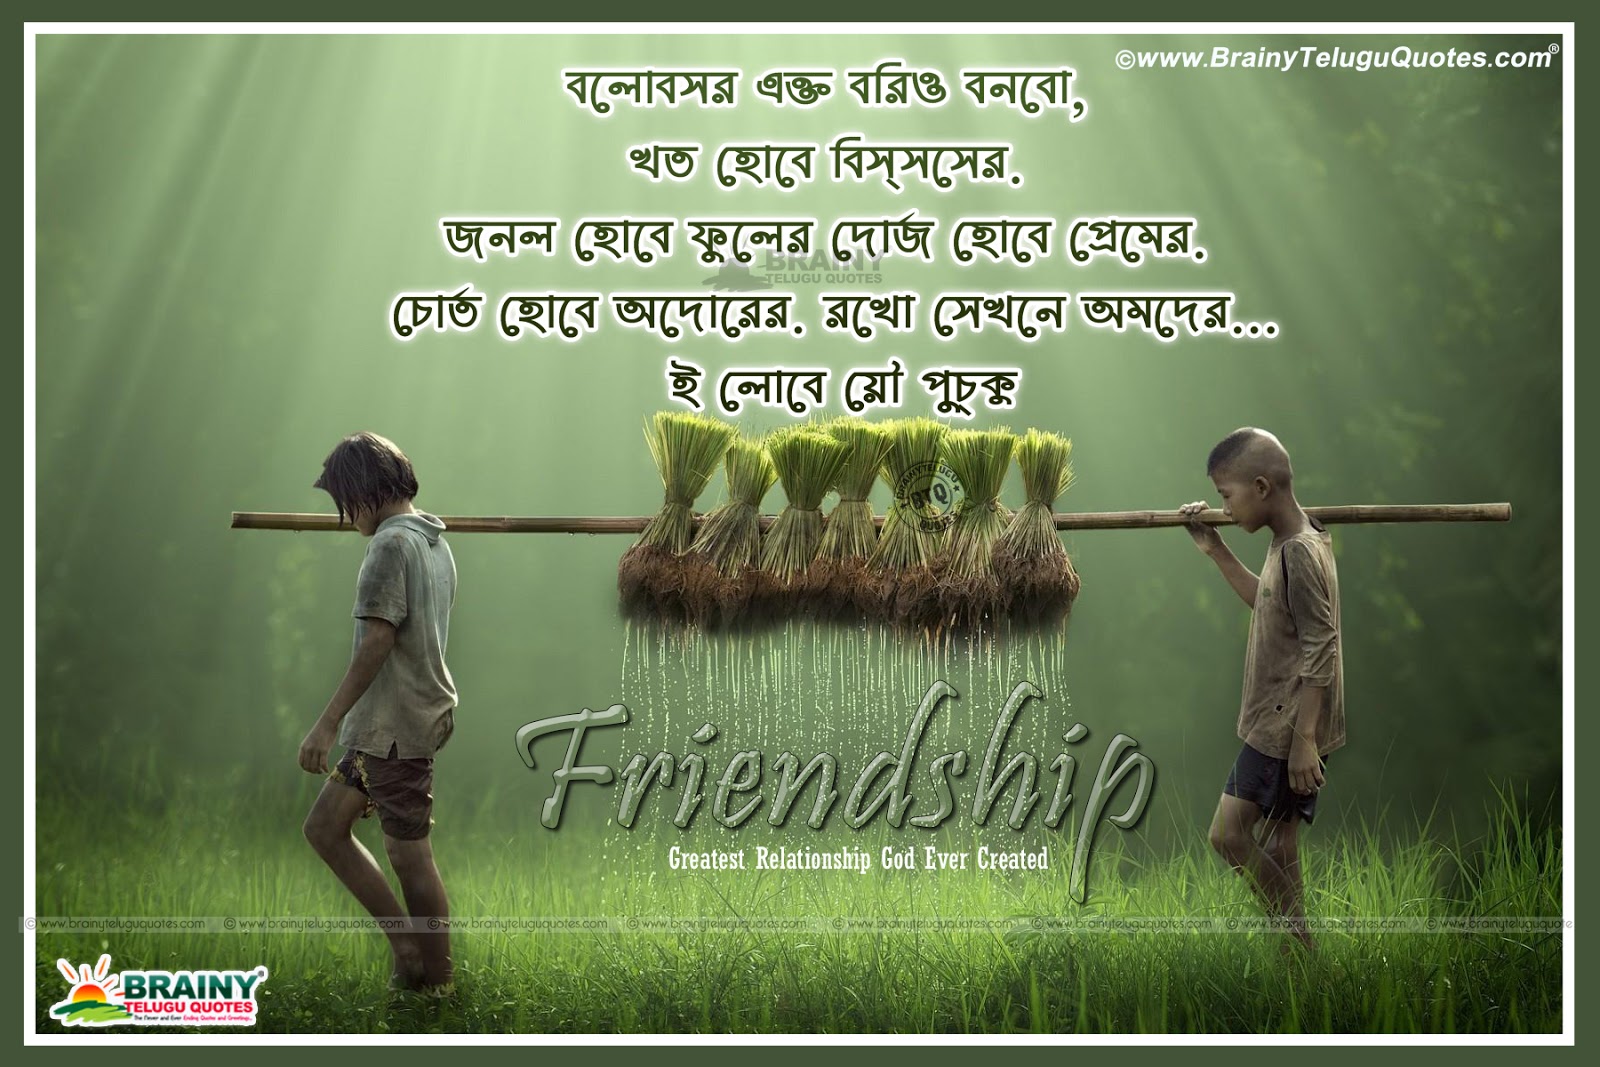 Bengali Friendship Messages, Bengali Quotes With Hd - Quotes On Friendship In Bengali - HD Wallpaper 